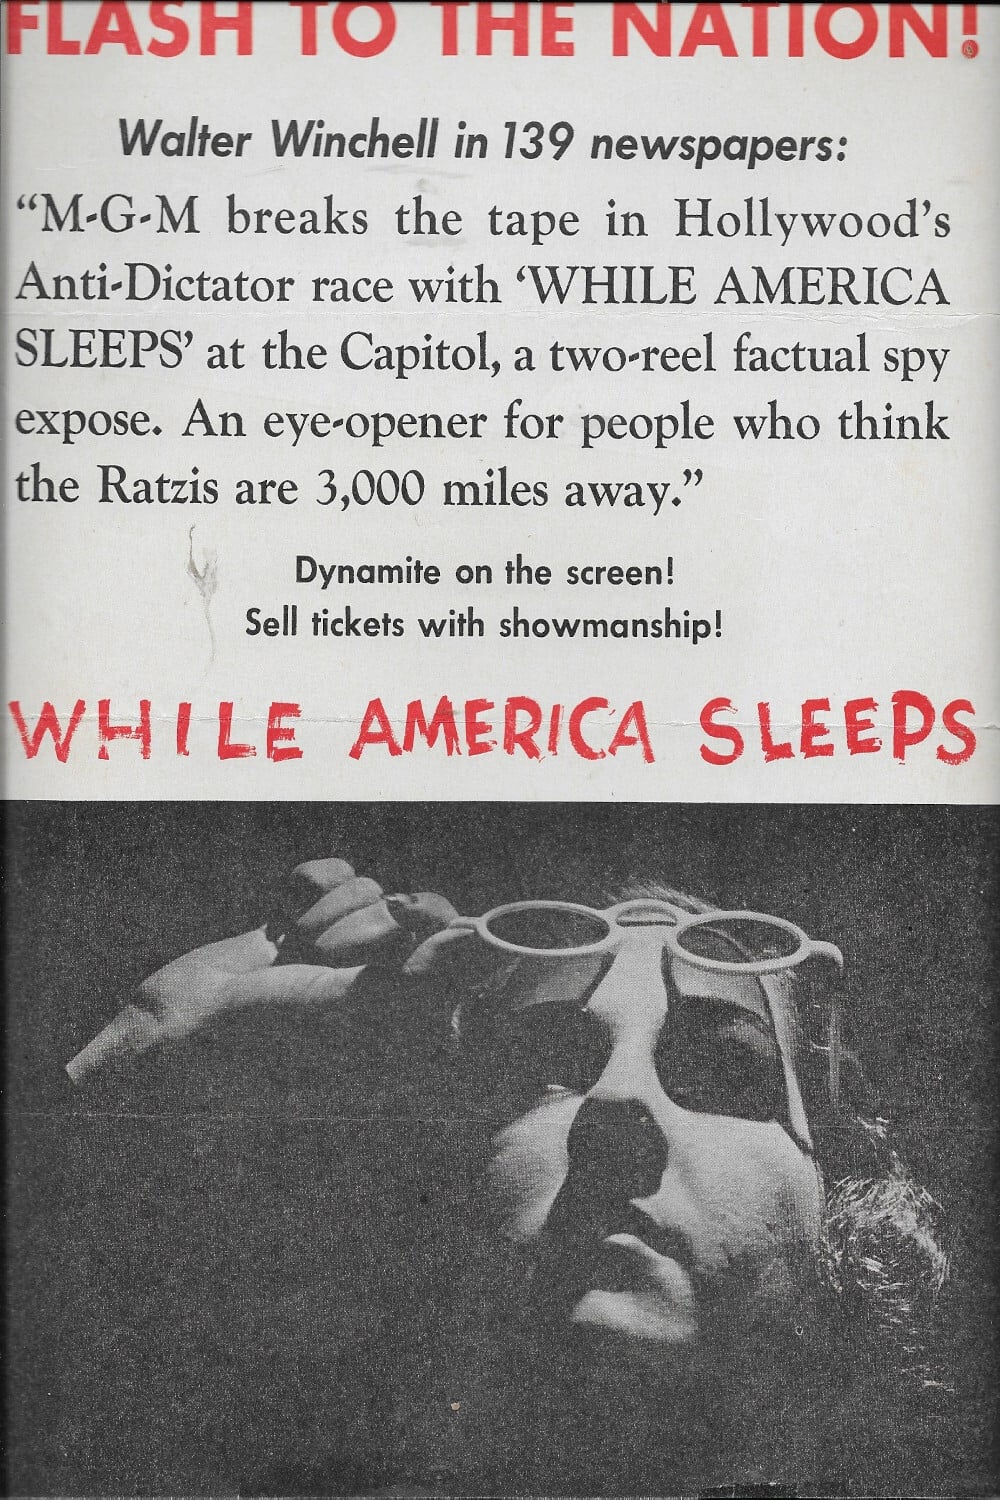 While America Sleeps